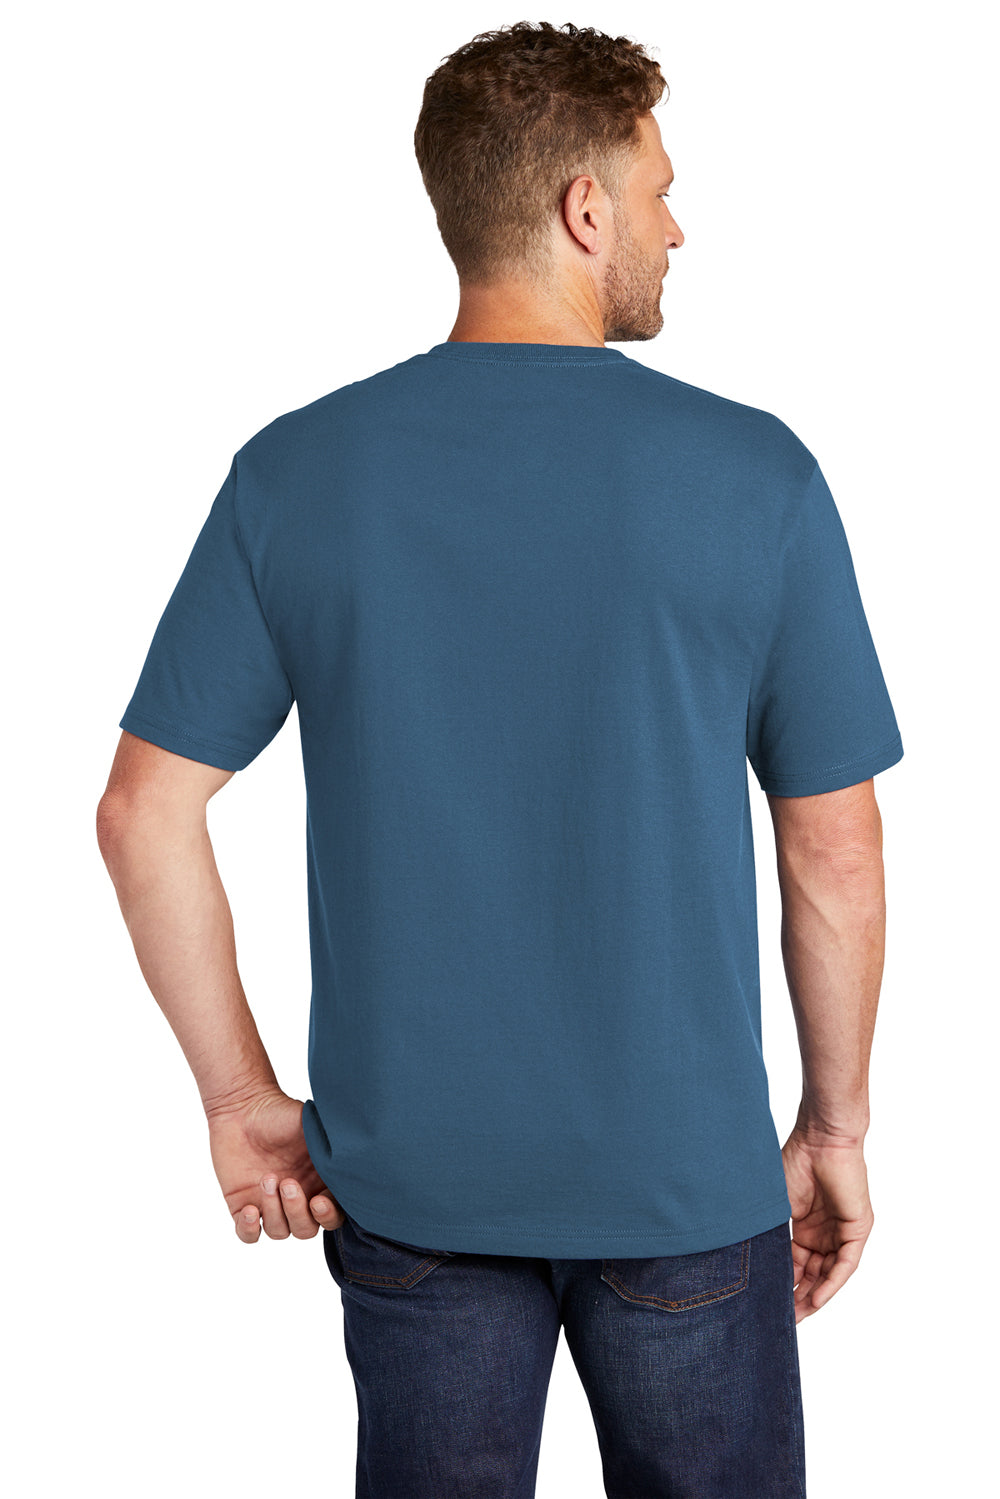 CornerStone Mens Short Sleeve Crewneck T-Shirt w/ Pocket Regatta Blue Side